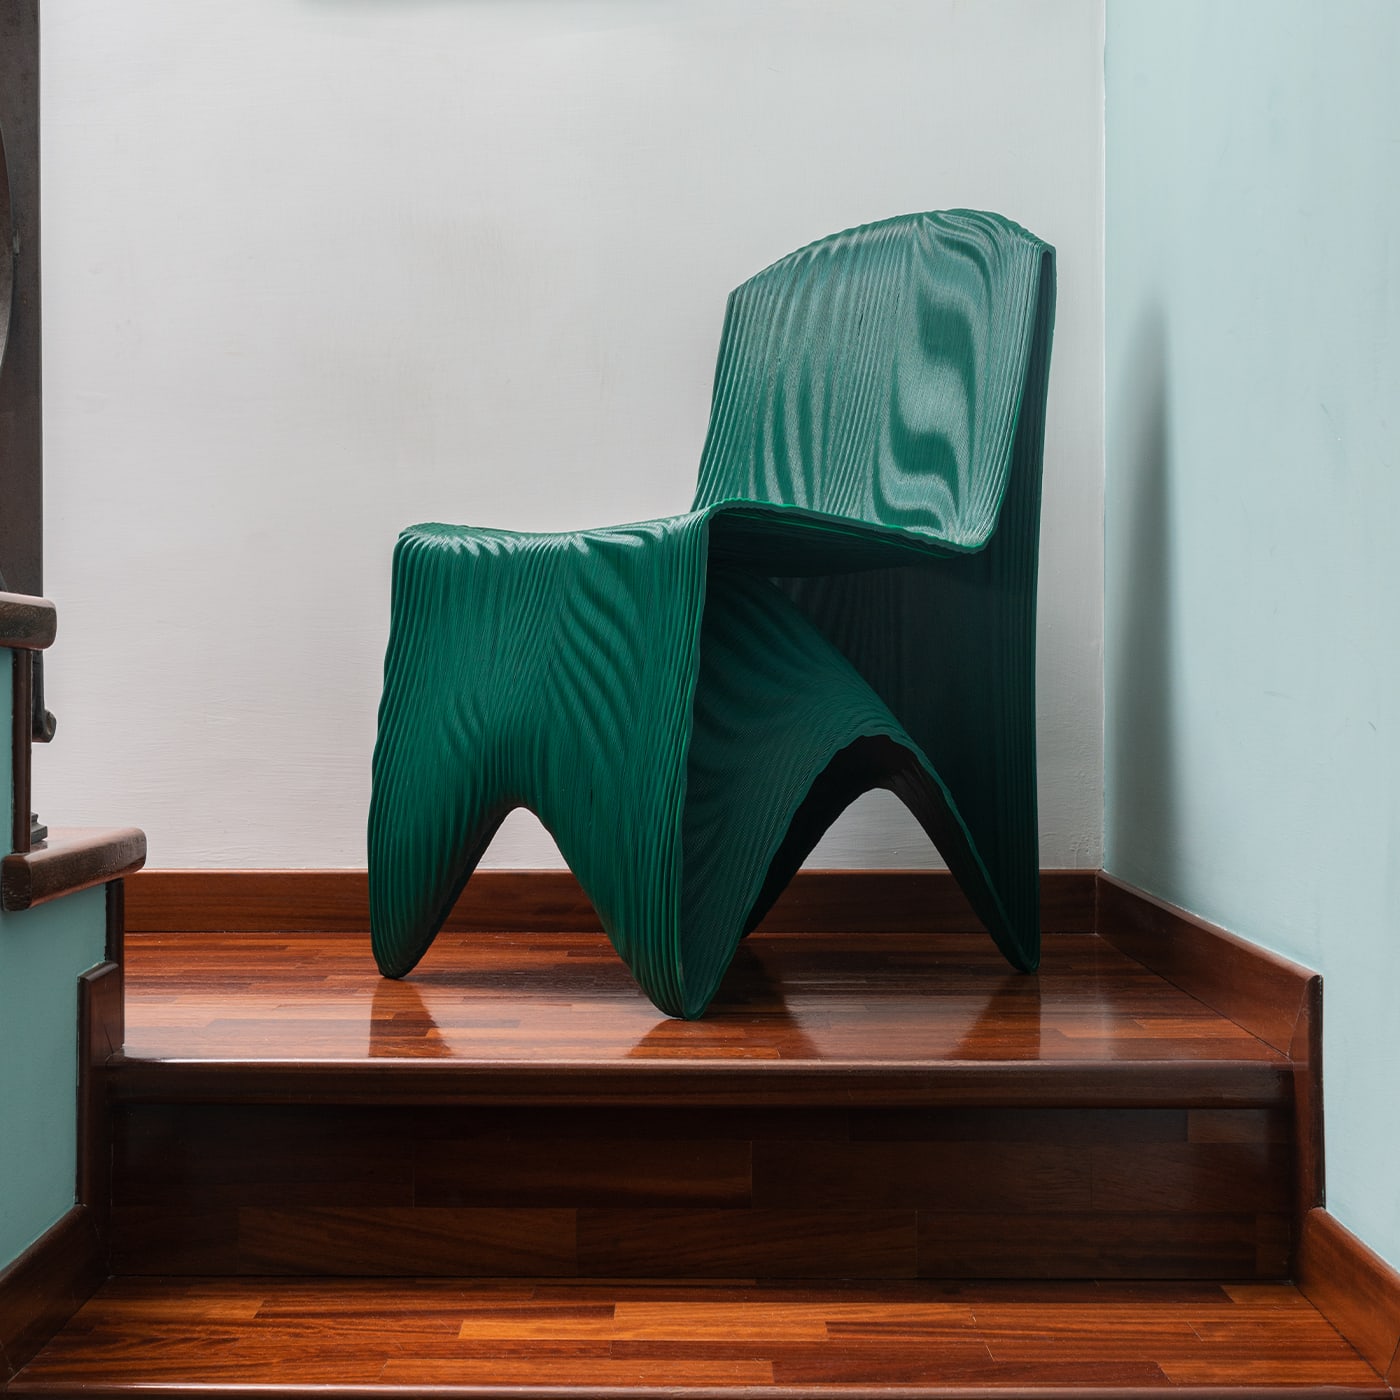 Santorini Green Chair - Medaarch